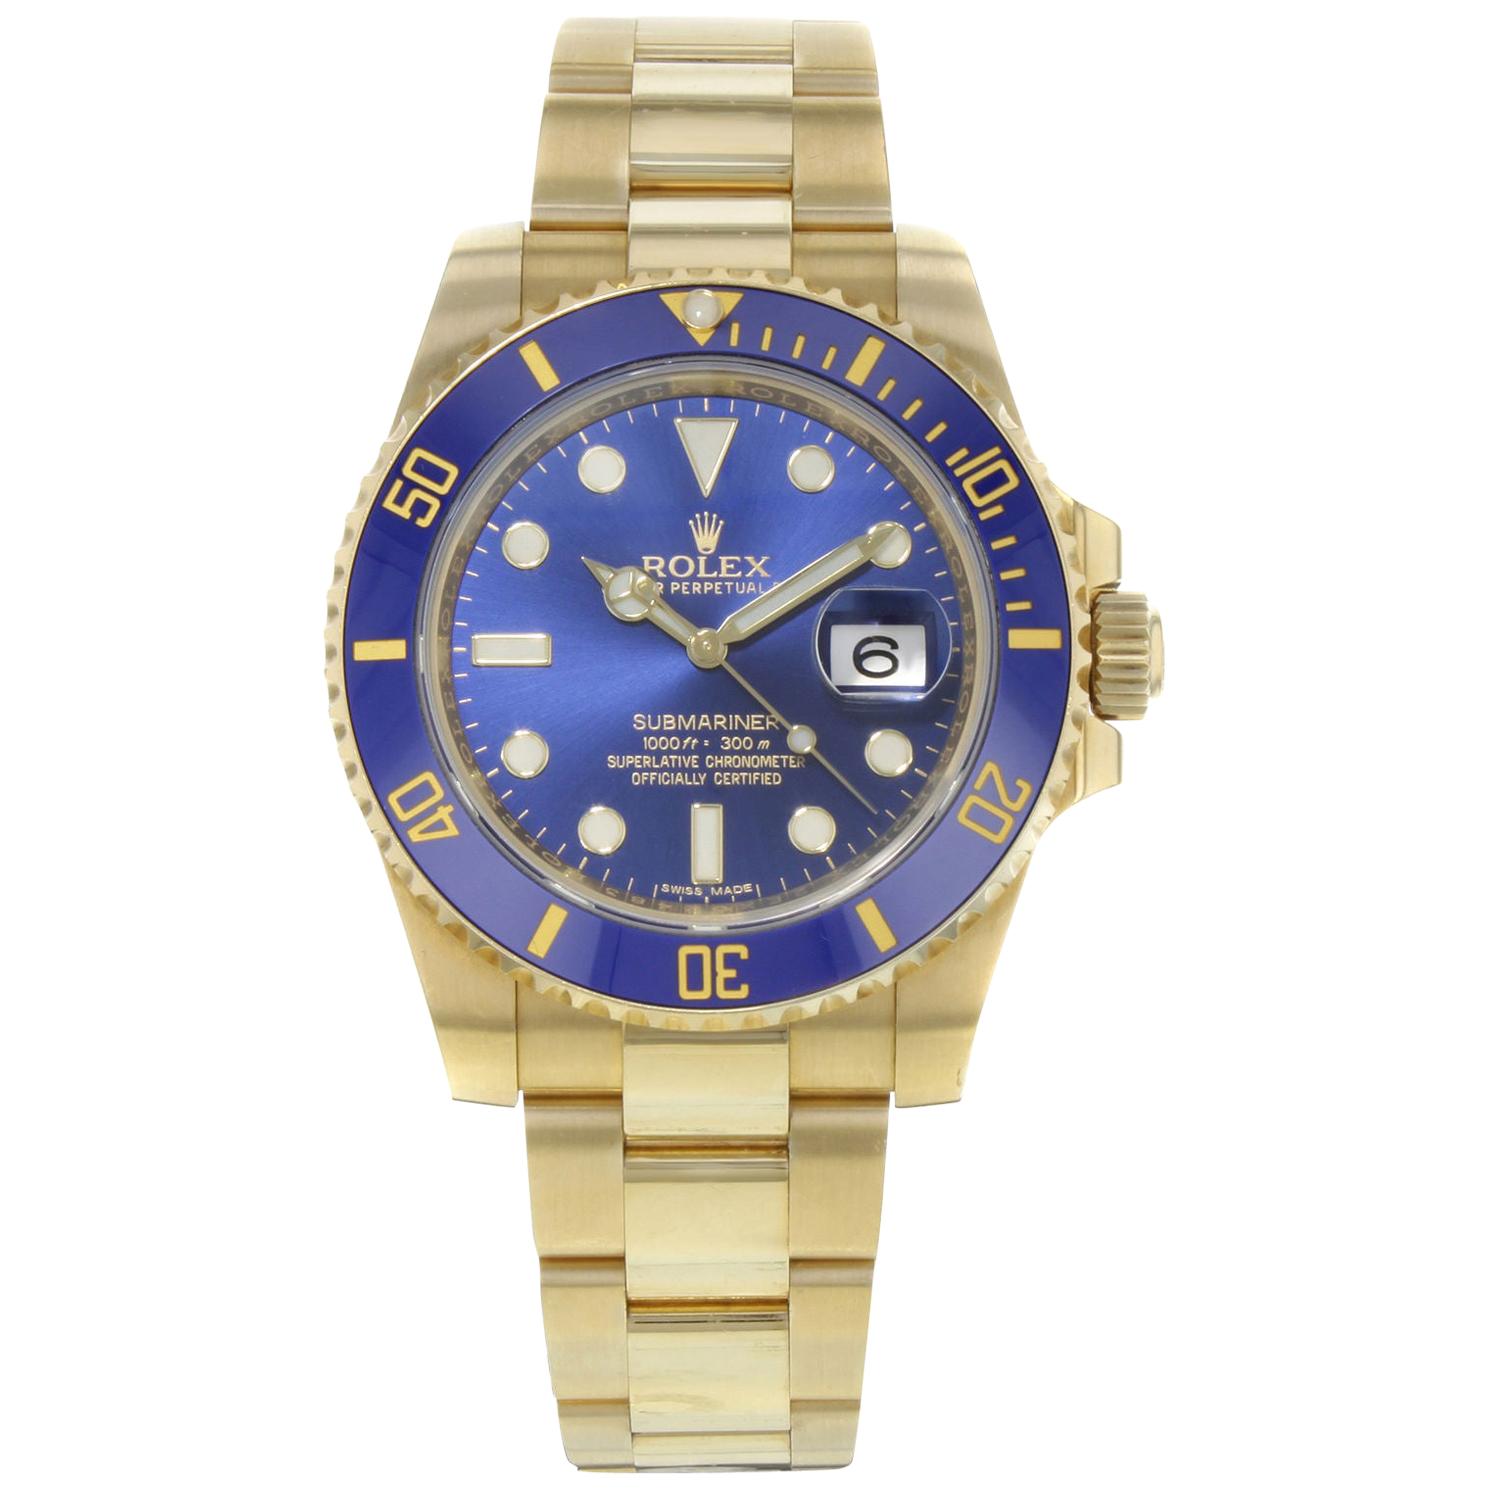 Rolex Submariner 116618 Blue on Blue 18 Karat Yellow Gold Automatic Men's Watch